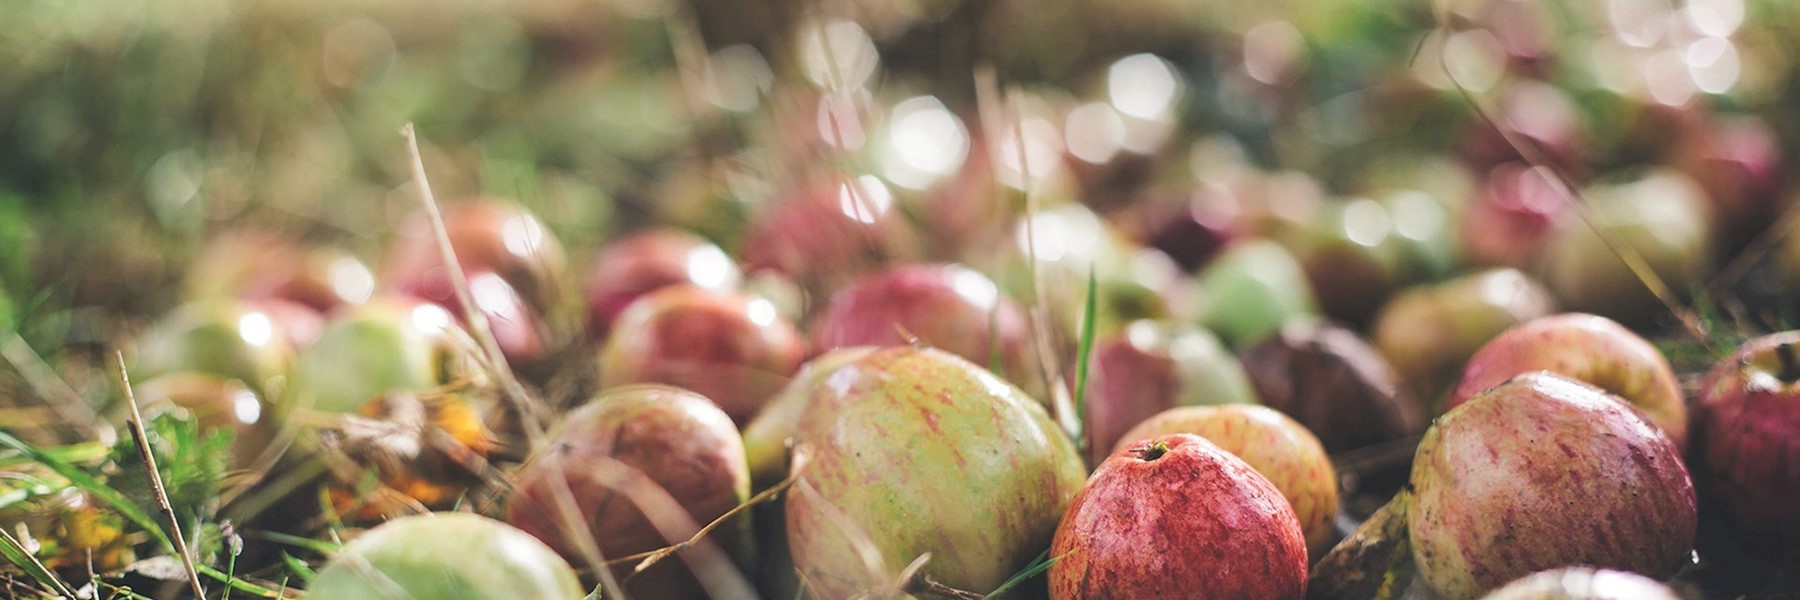 orchard-apples-medium-colour-fix